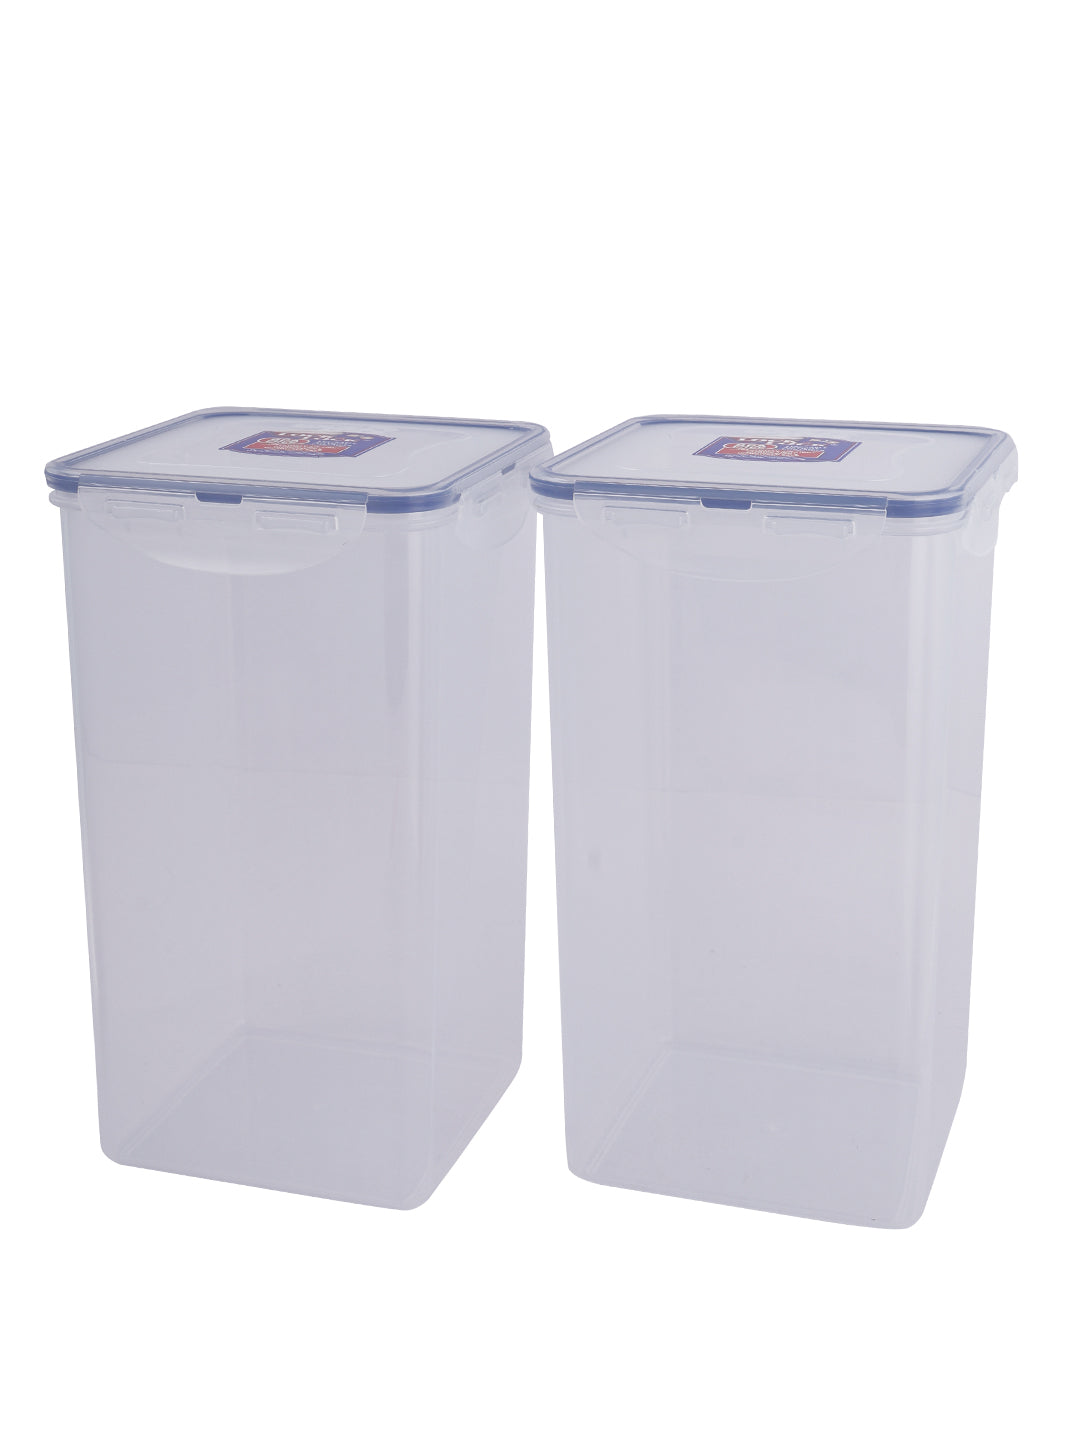 LocknLock Classics Square Plastic Airtight Food Storage Container, 4 Liter, Set of 2